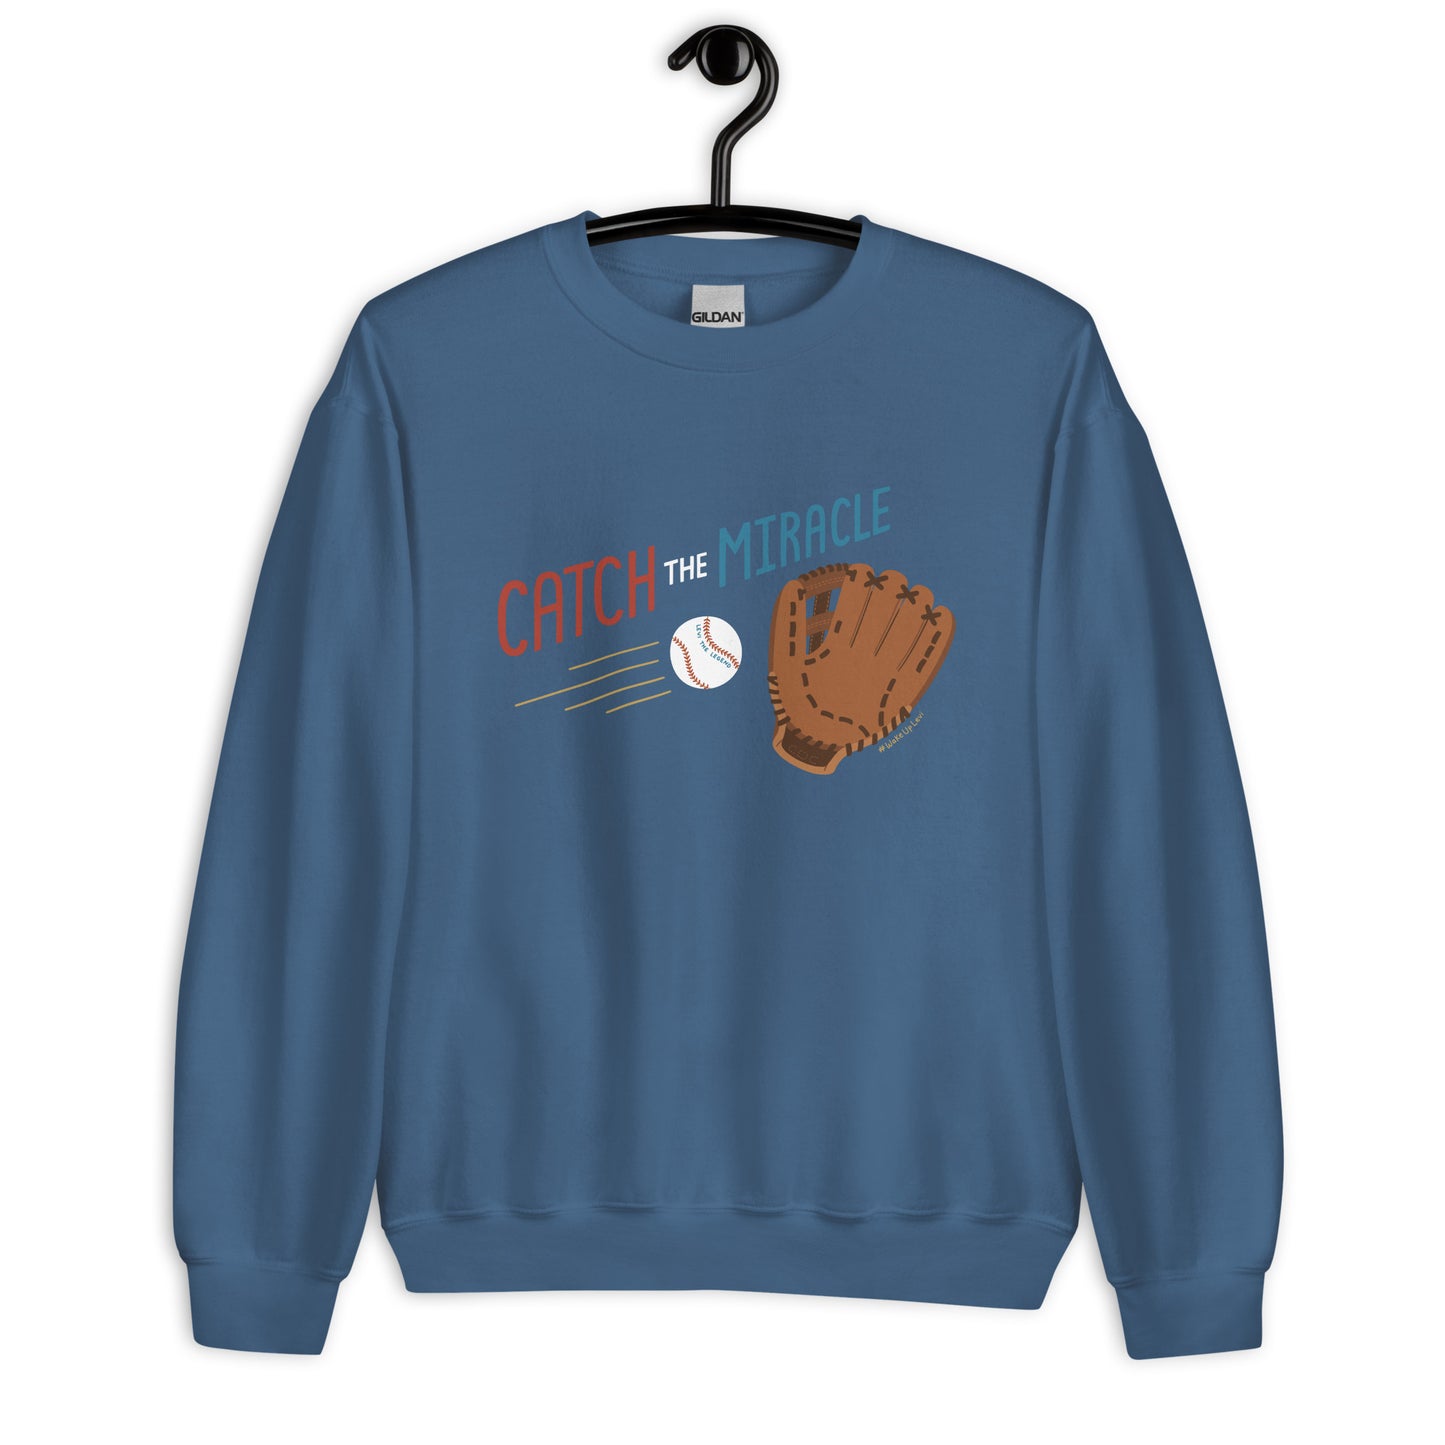 Catch The Miracle — Adult Unisex Crewneck Sweatshirt